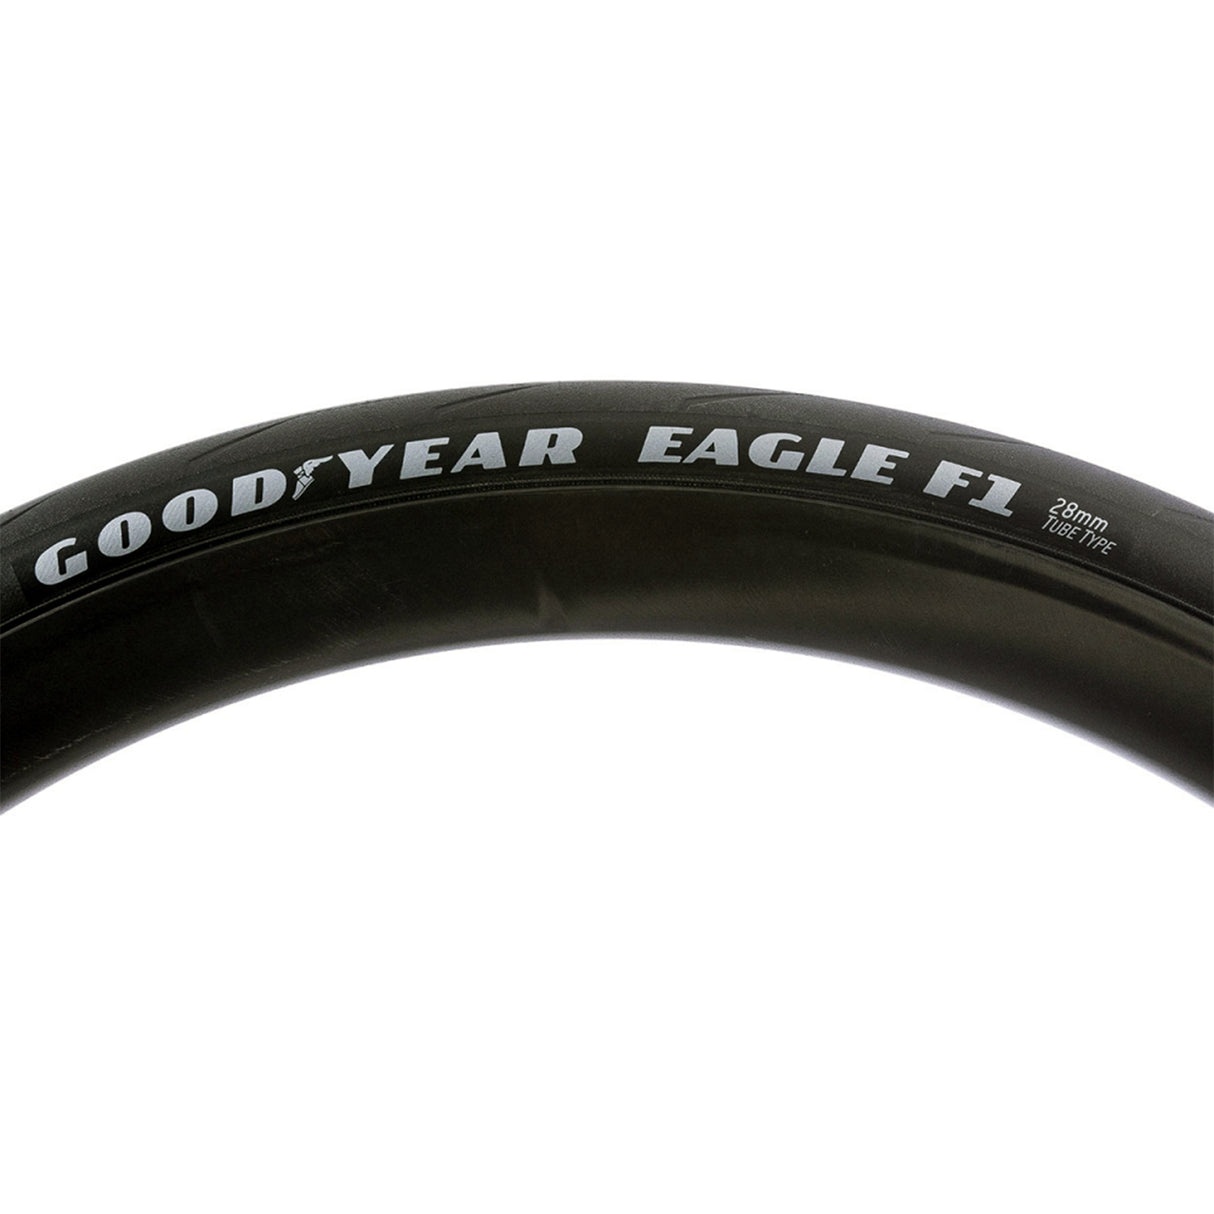 Goodyear Eagle F1 Tube Type 700c Tyre